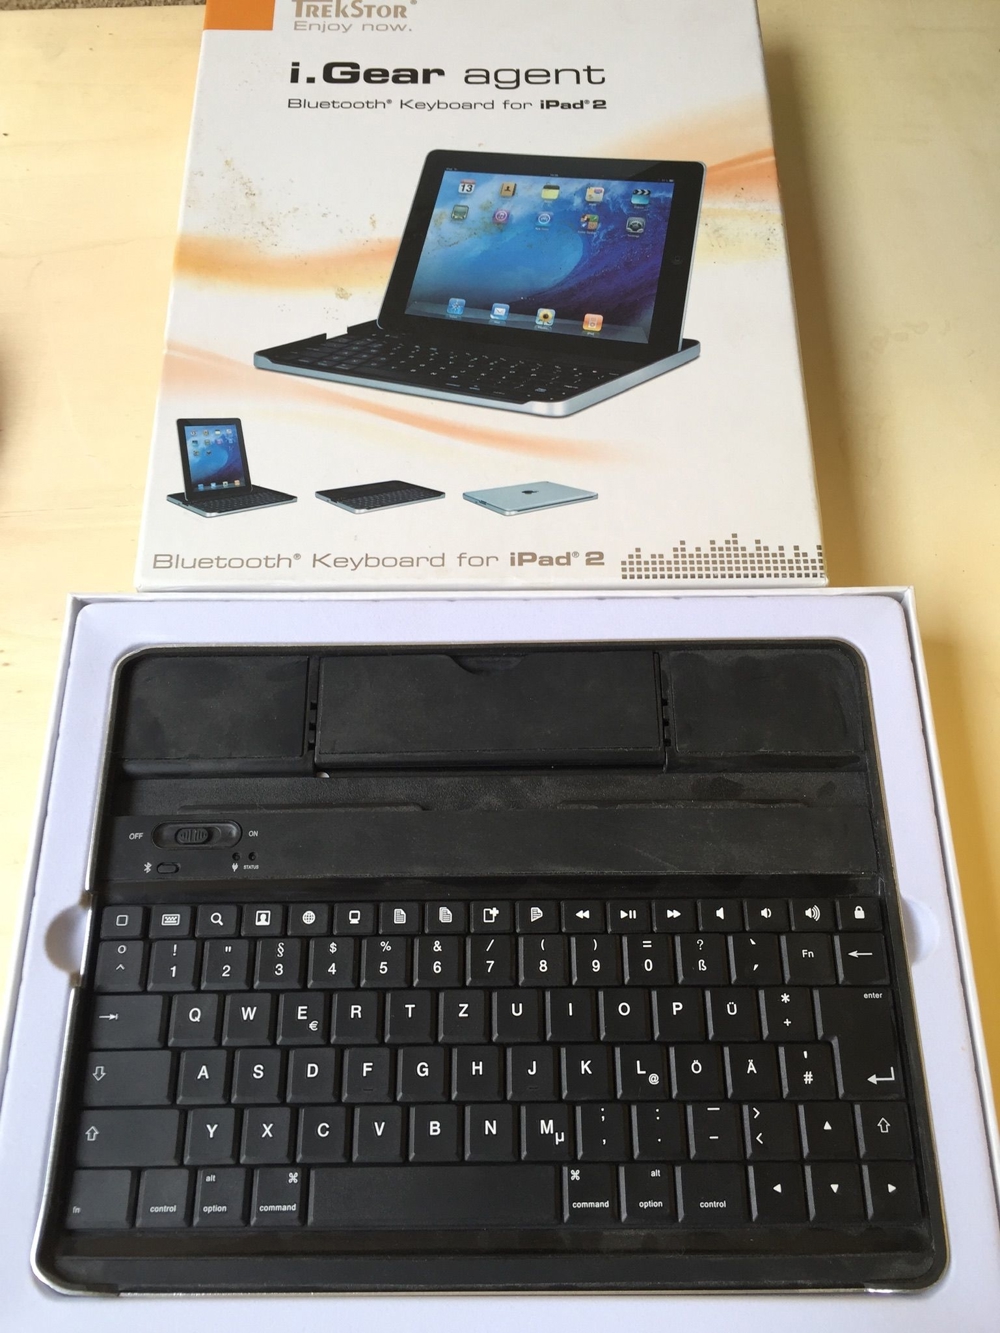 Tastatur für iPad, Bluetooth, kaum gebraucht